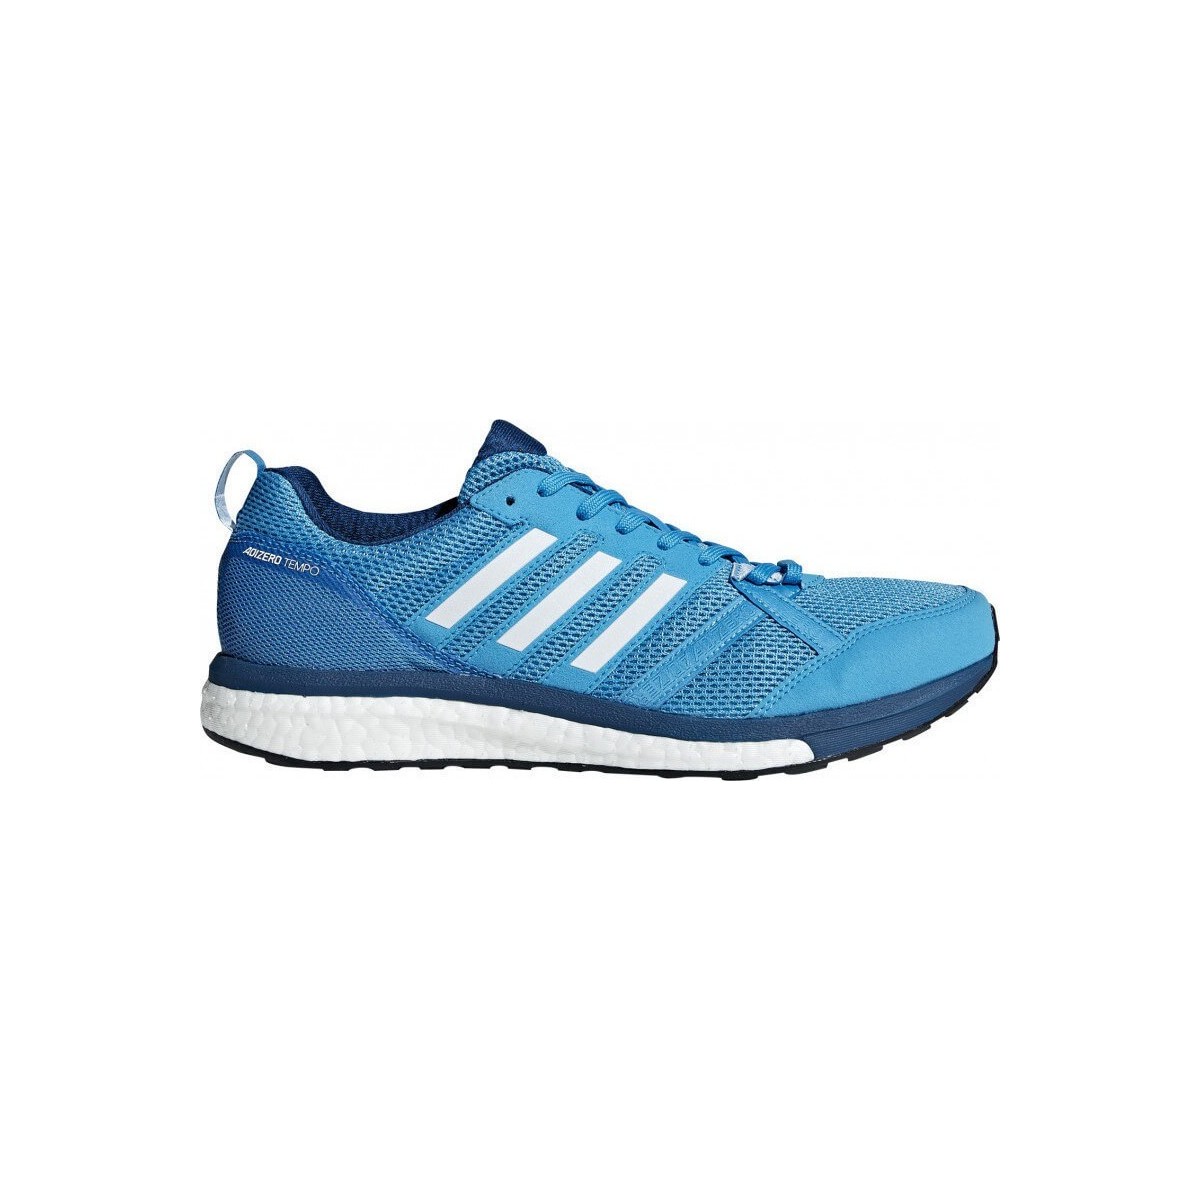 Adidas Adizero Tempo 9 Blue White PV19 Men's Shoes